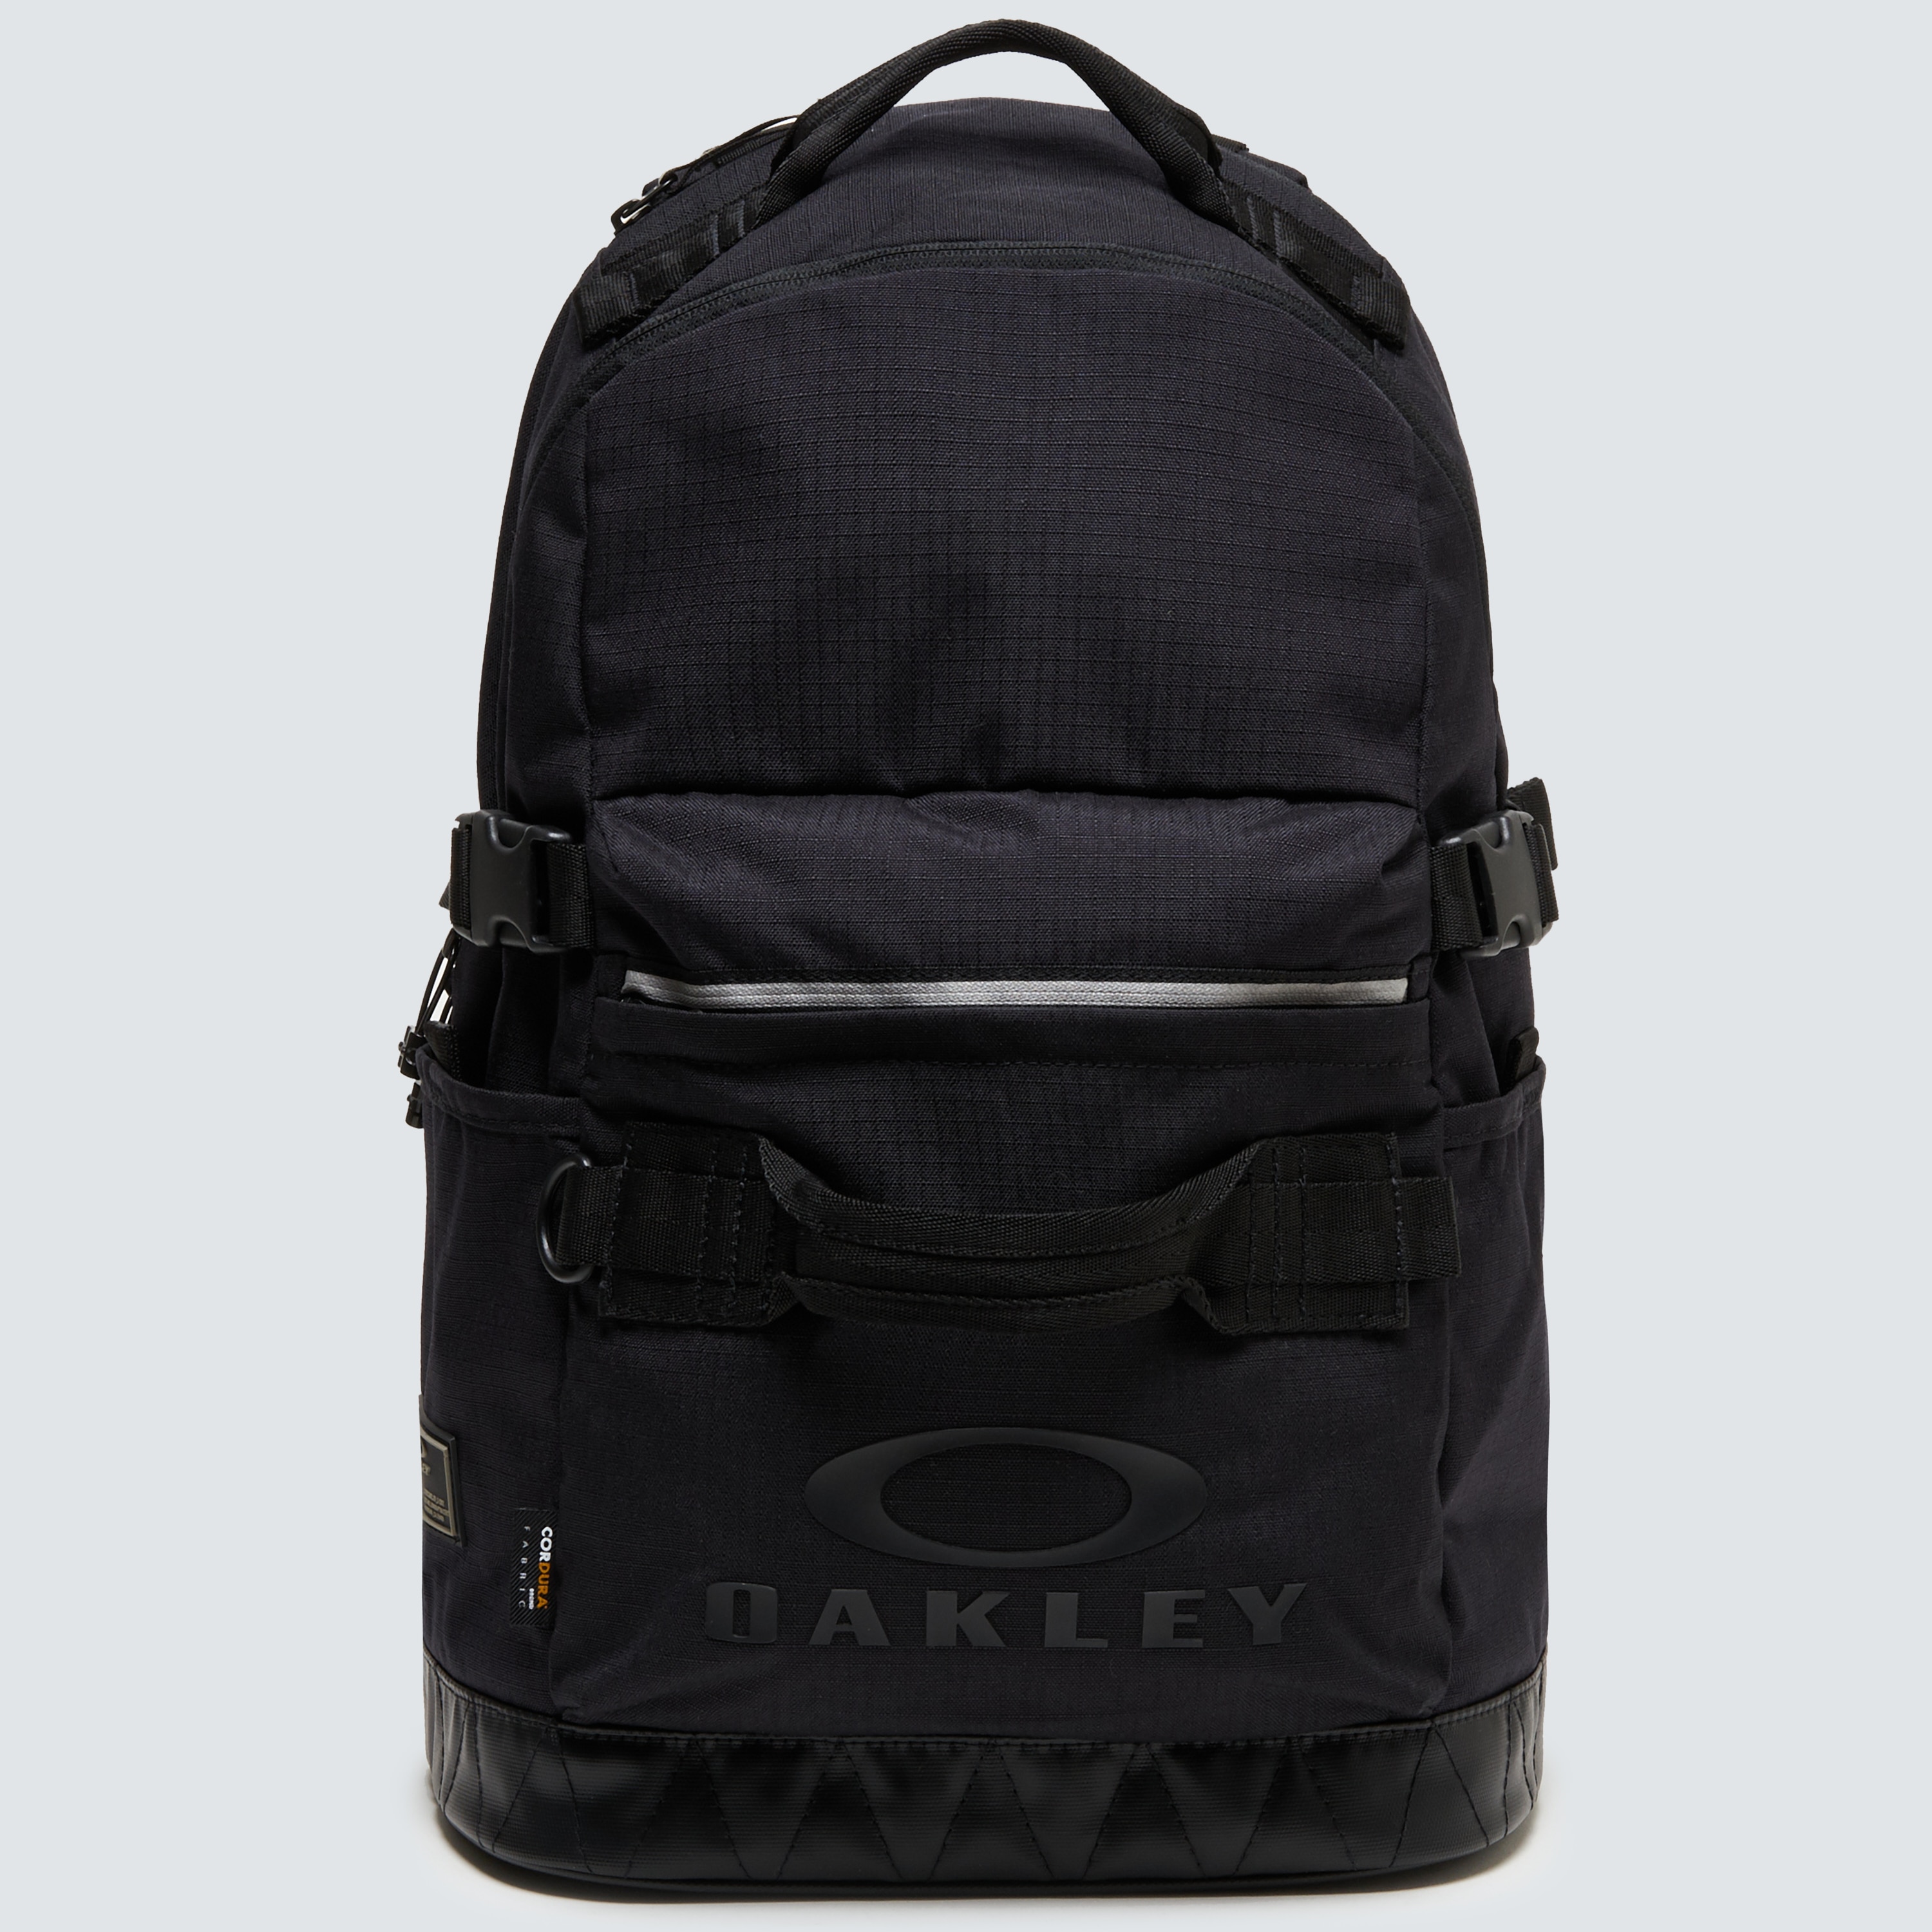 Oakley Utility Backpack - Blackout 